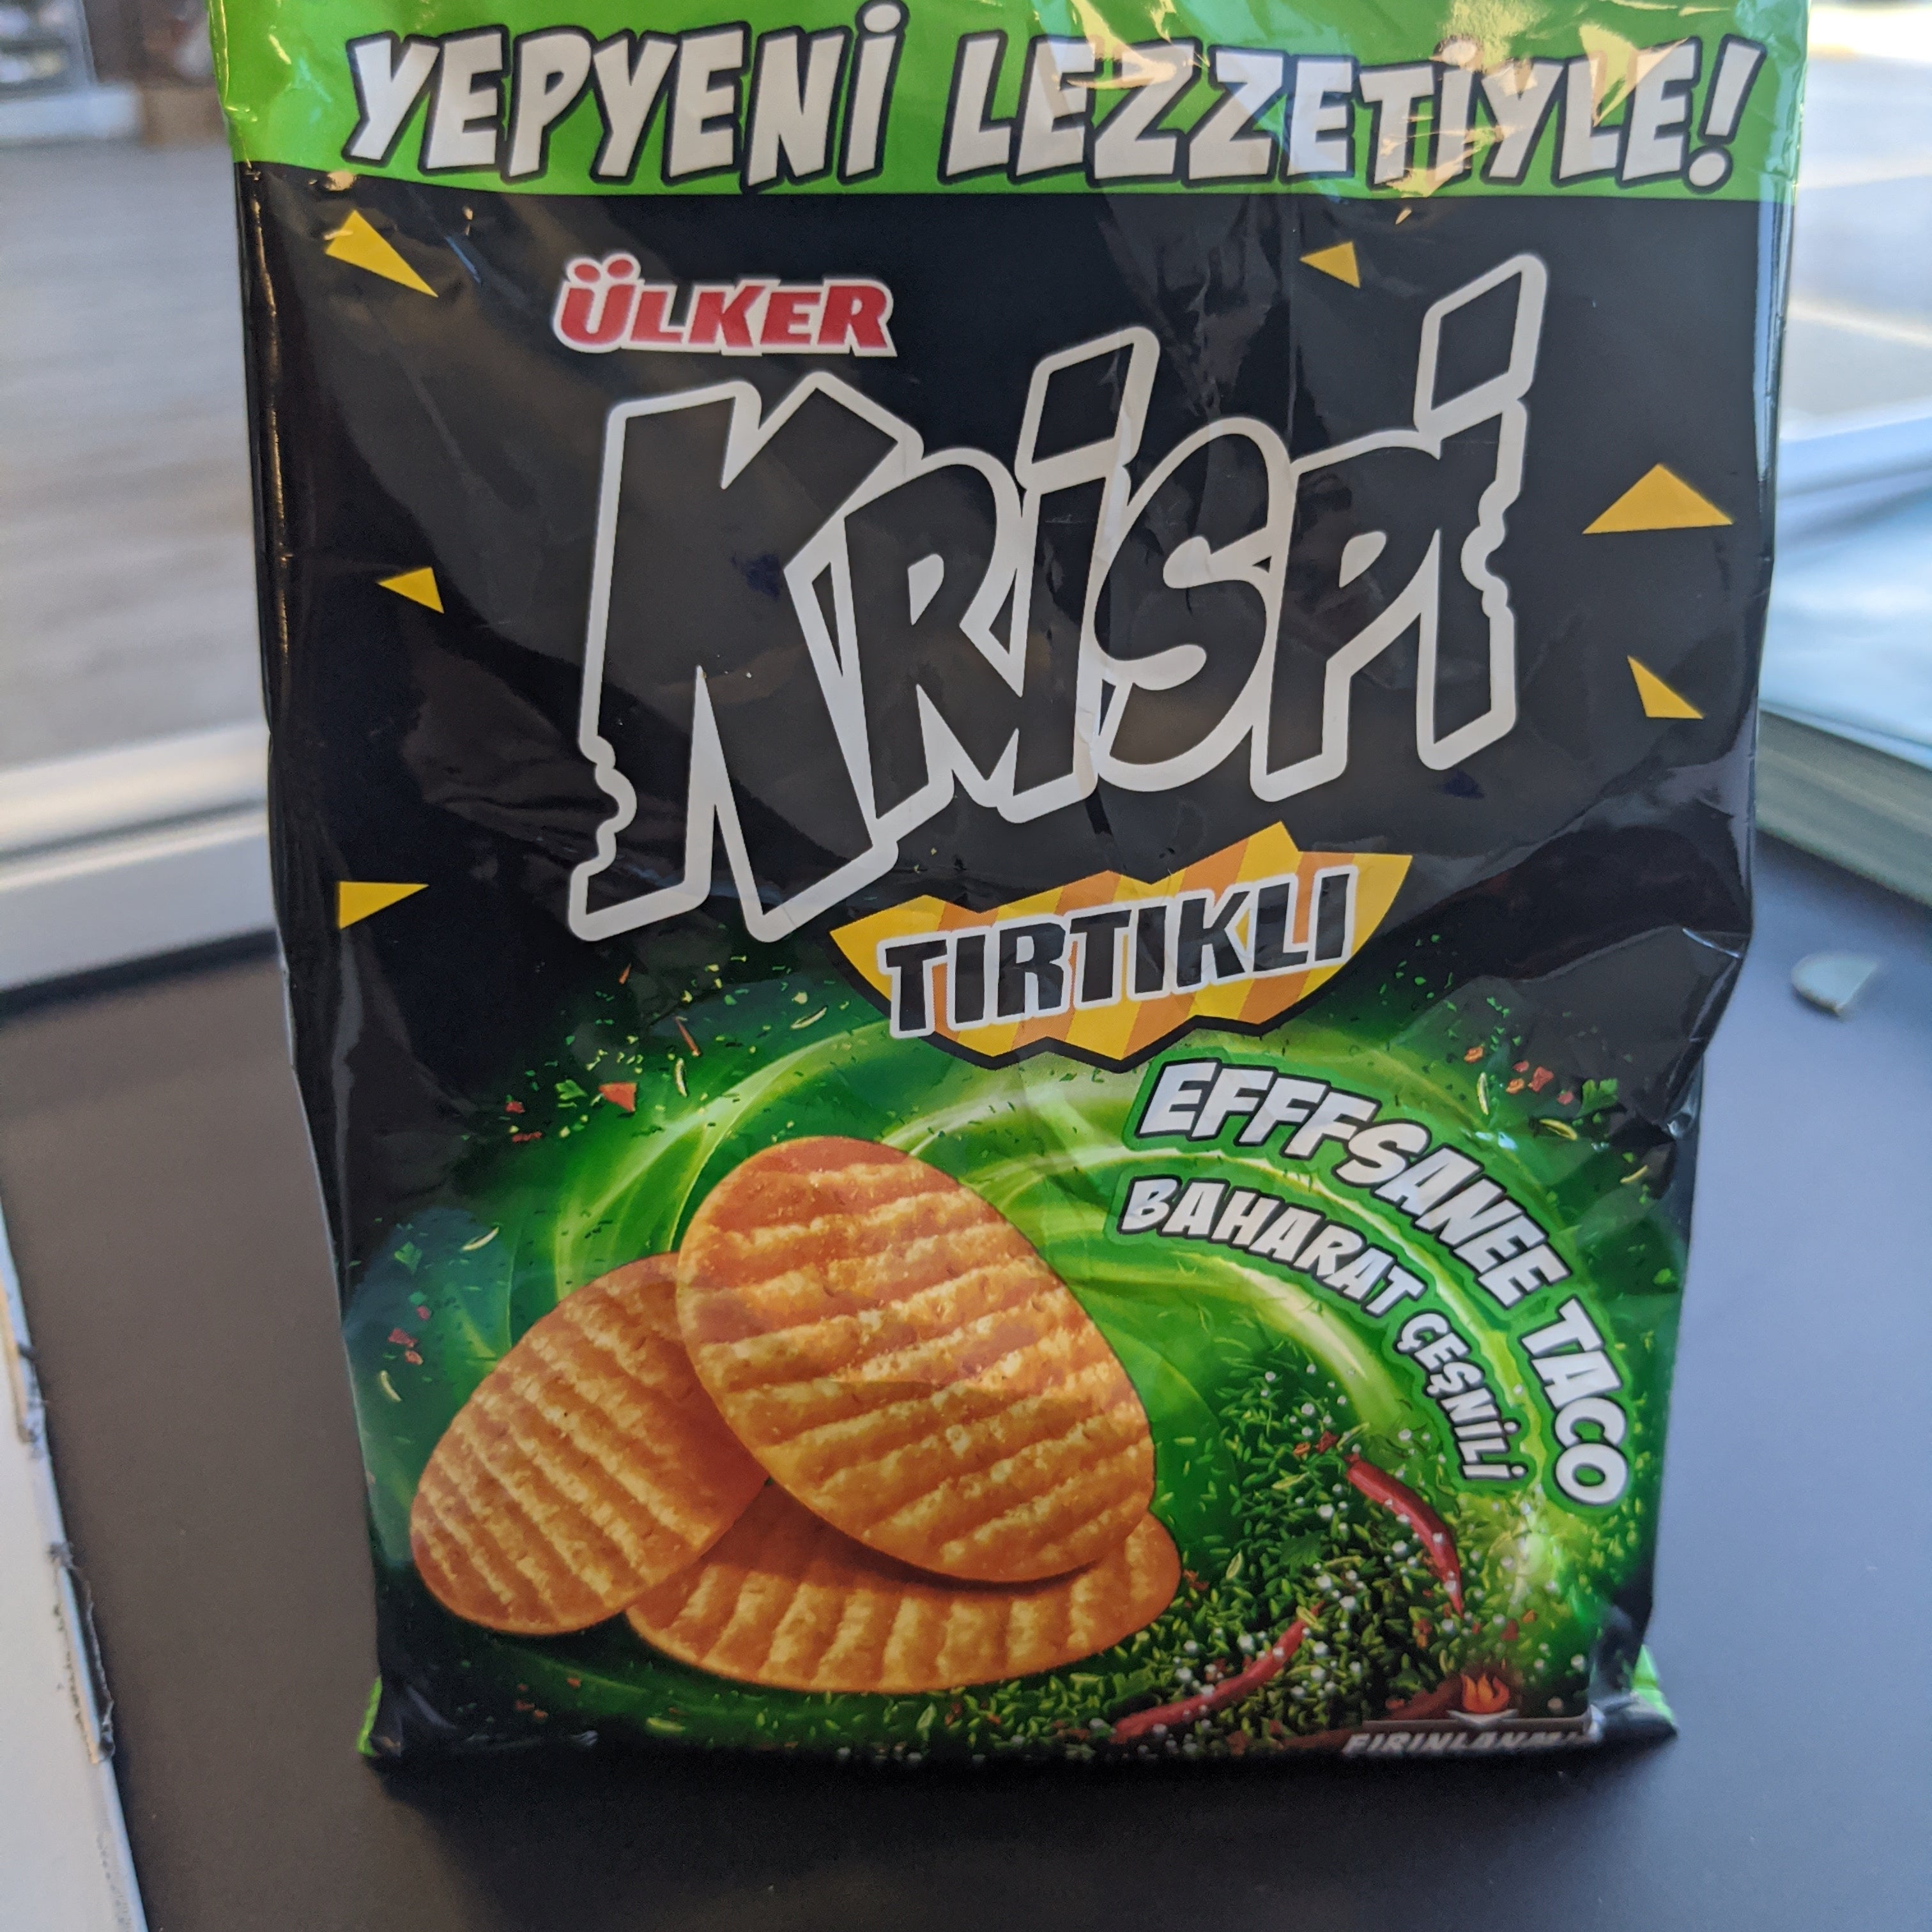 Ulker Krispi Tirtikli Spicy Cracker 48g